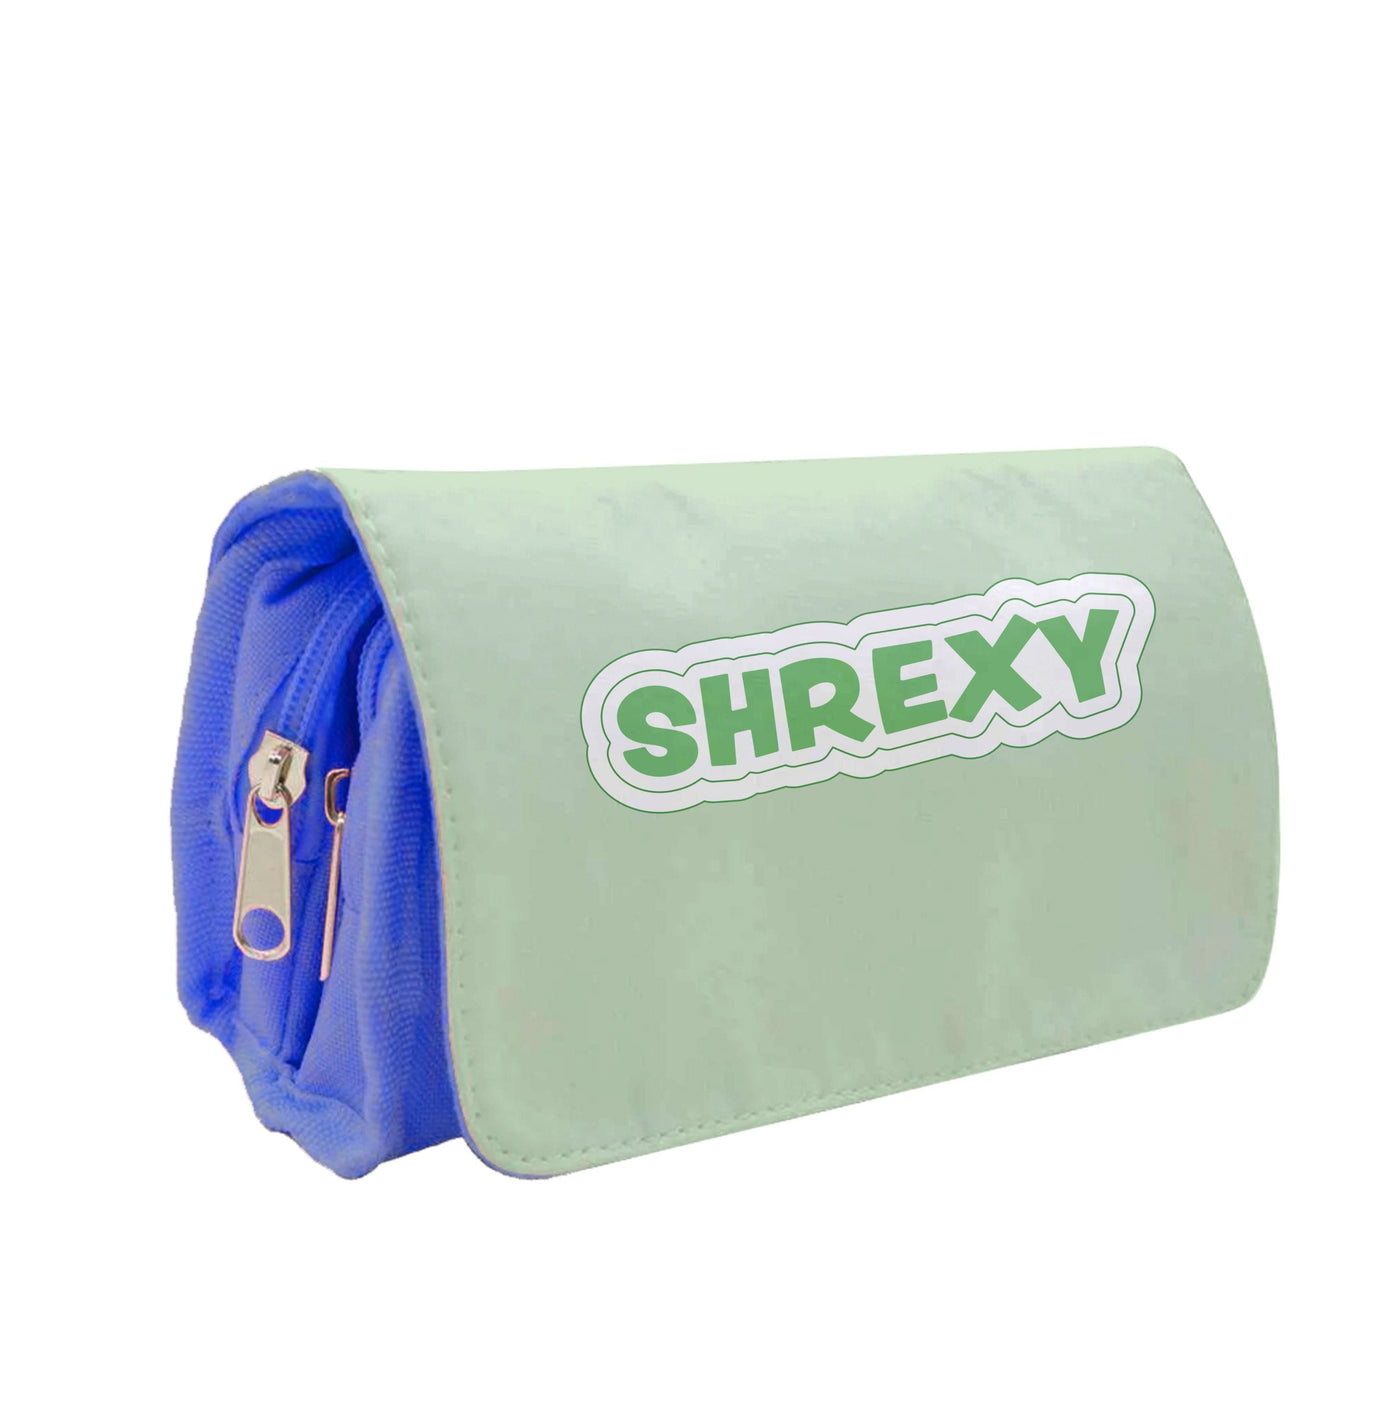 Shrexy Pencil Case